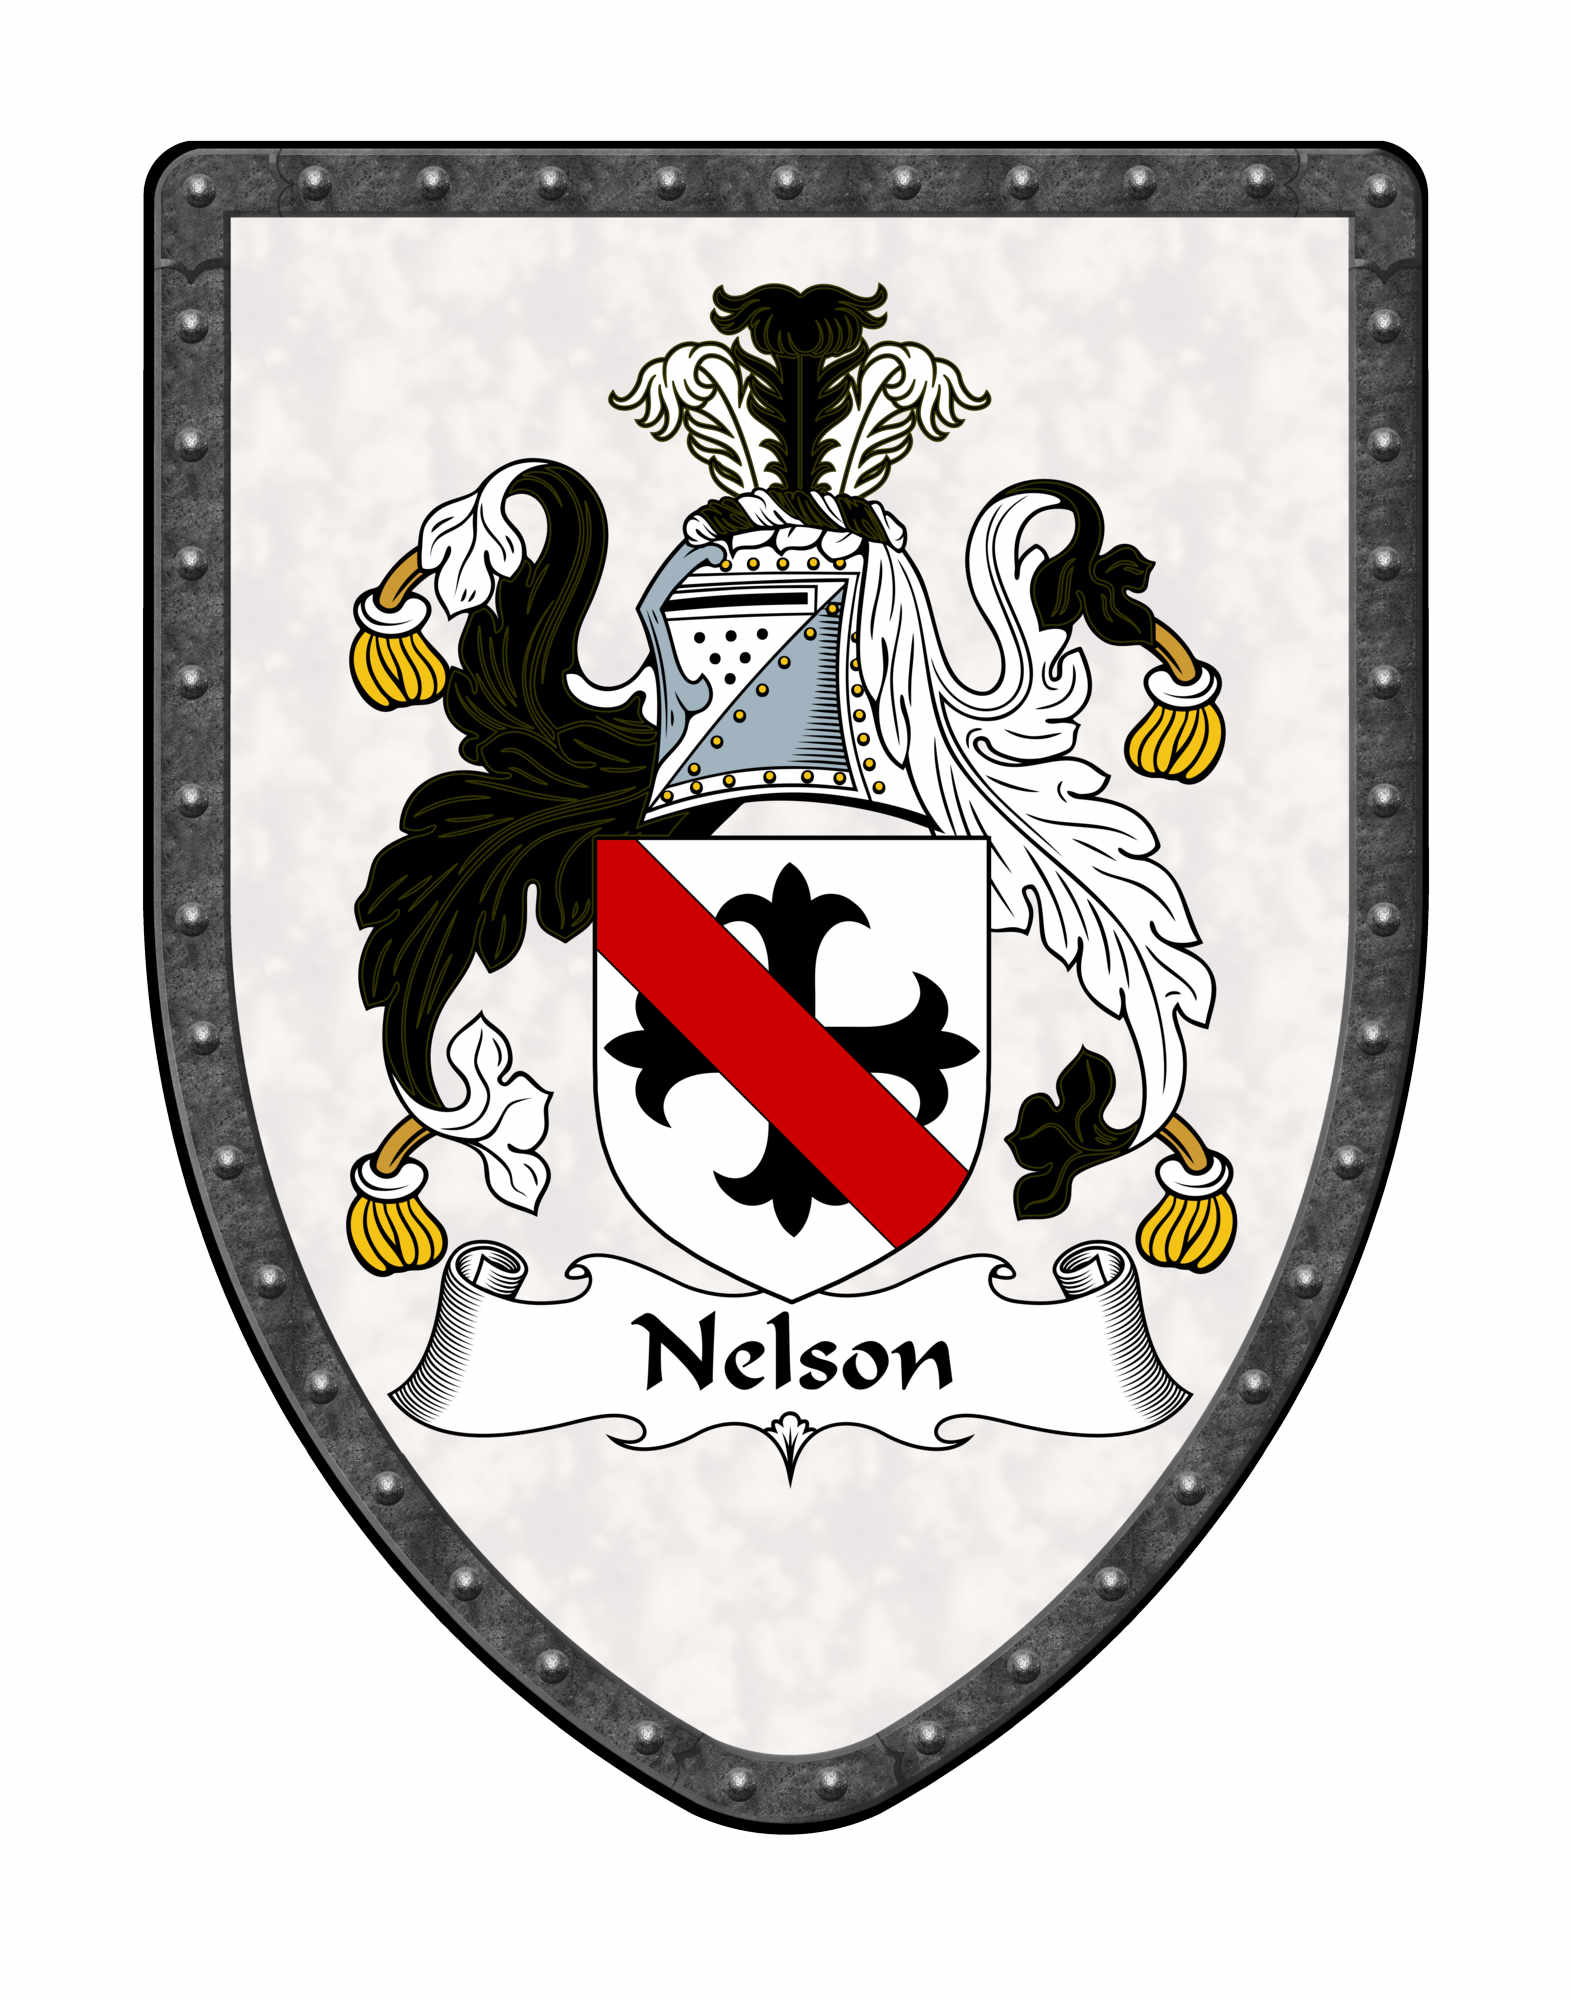 Custom Family Coat of Arms by Swordsandarmor.com